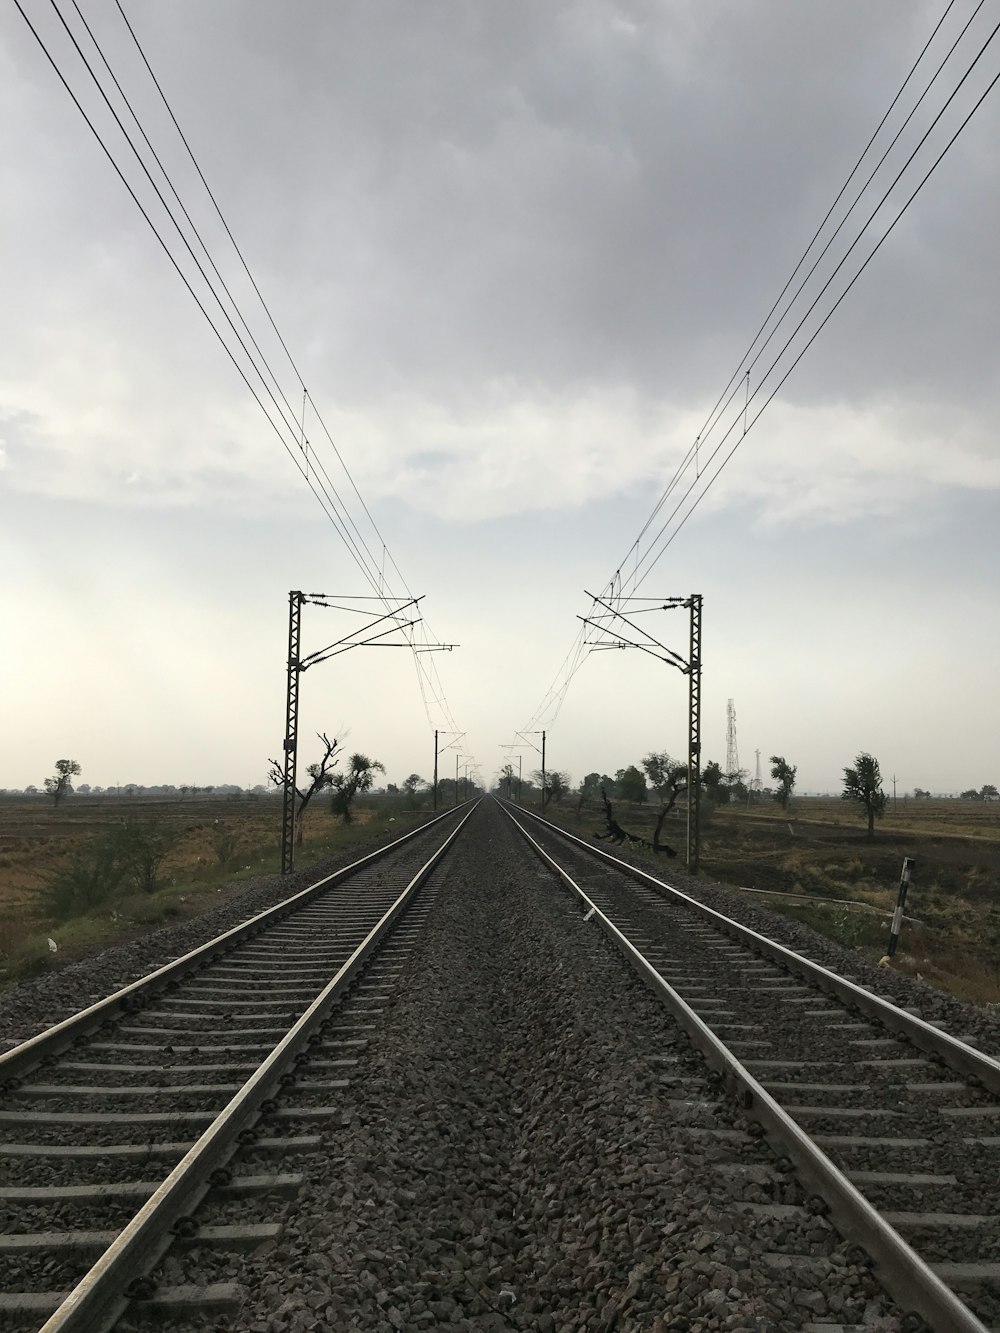 black metal train rail under white clouds during daytime